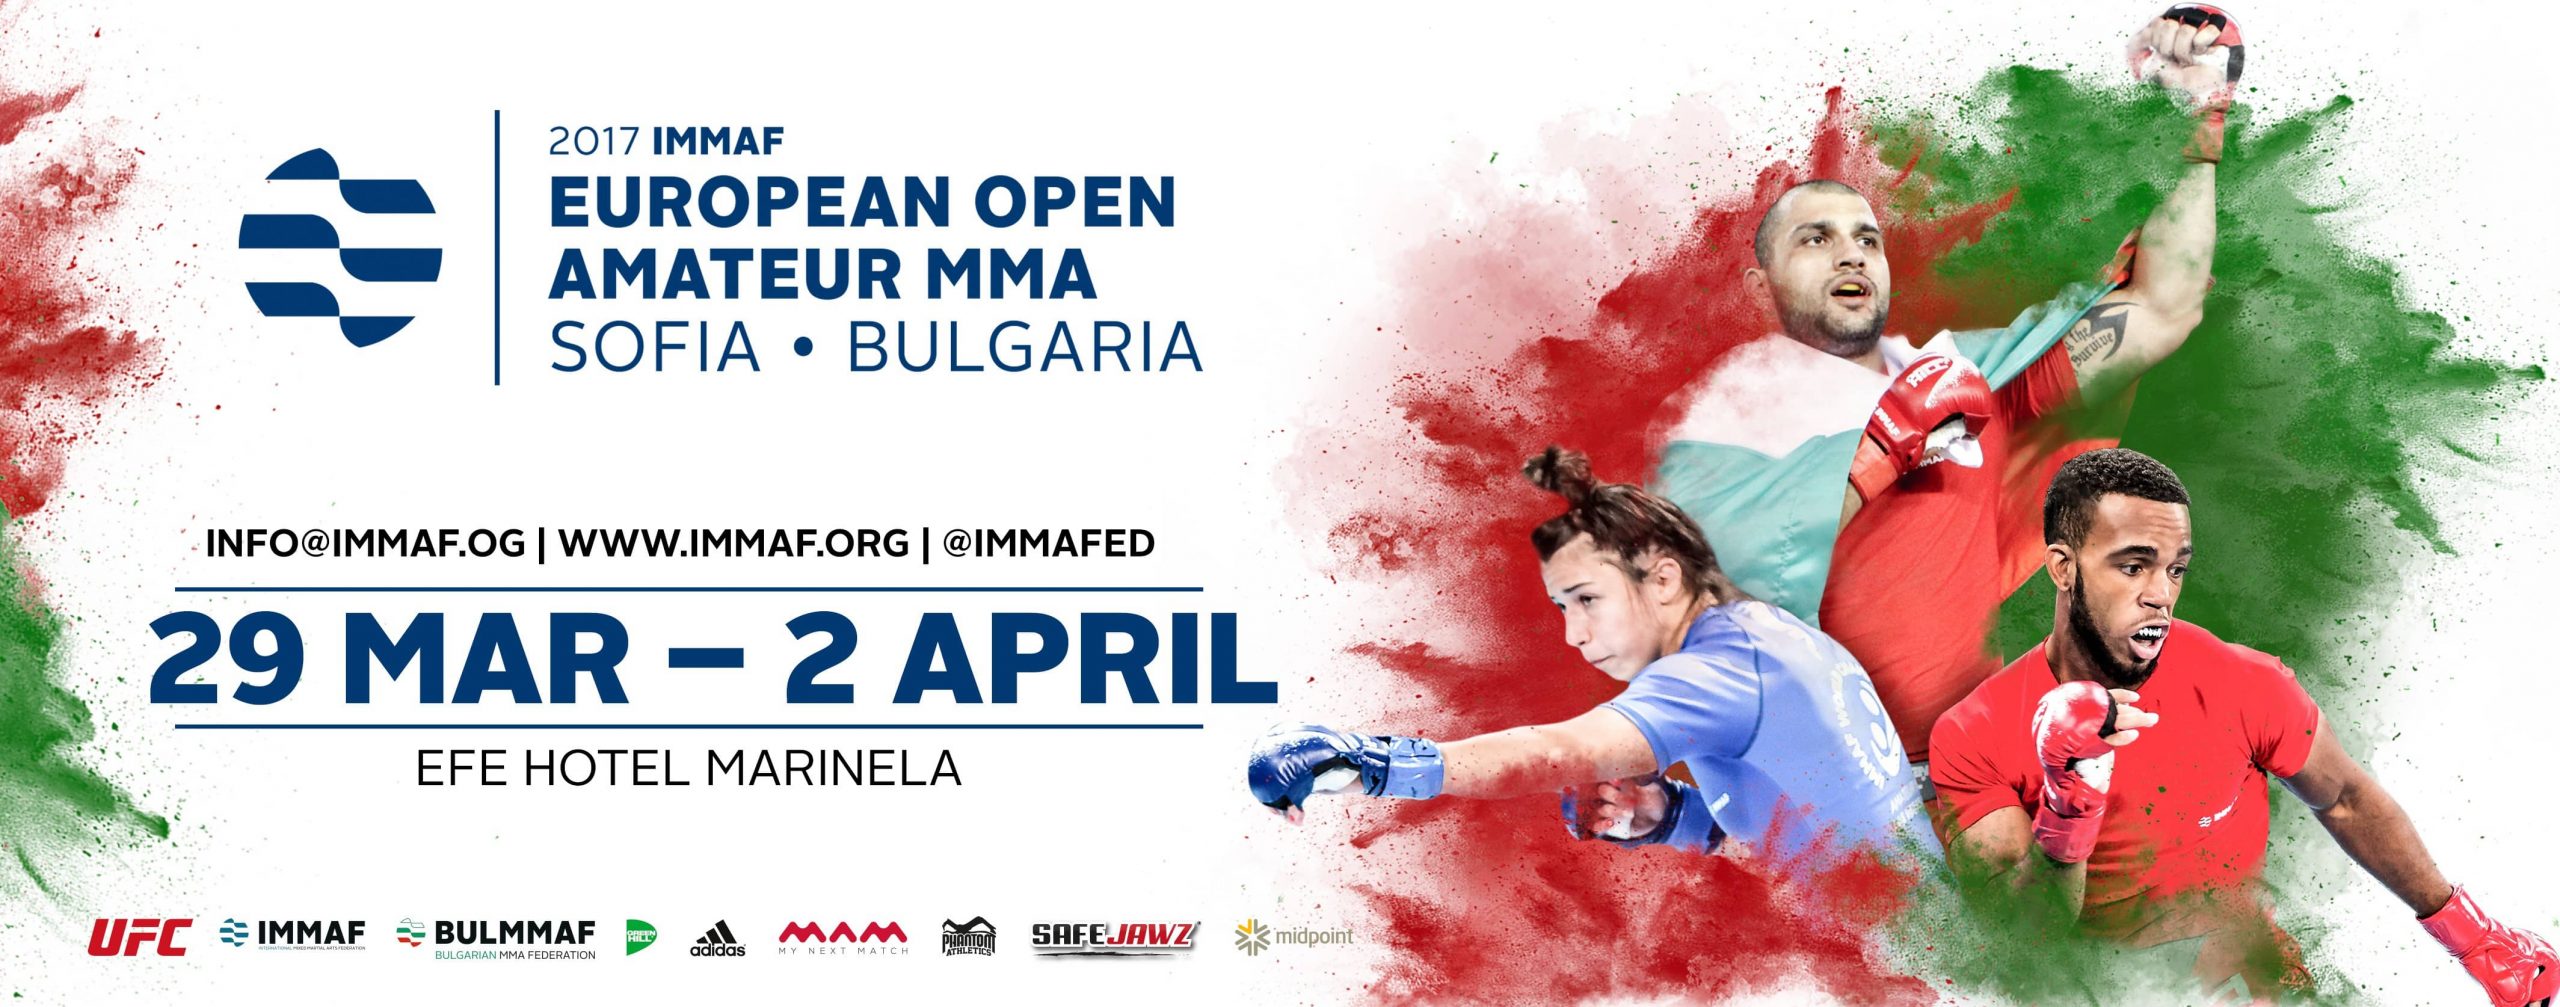 2017 IMMAF European Open Championships